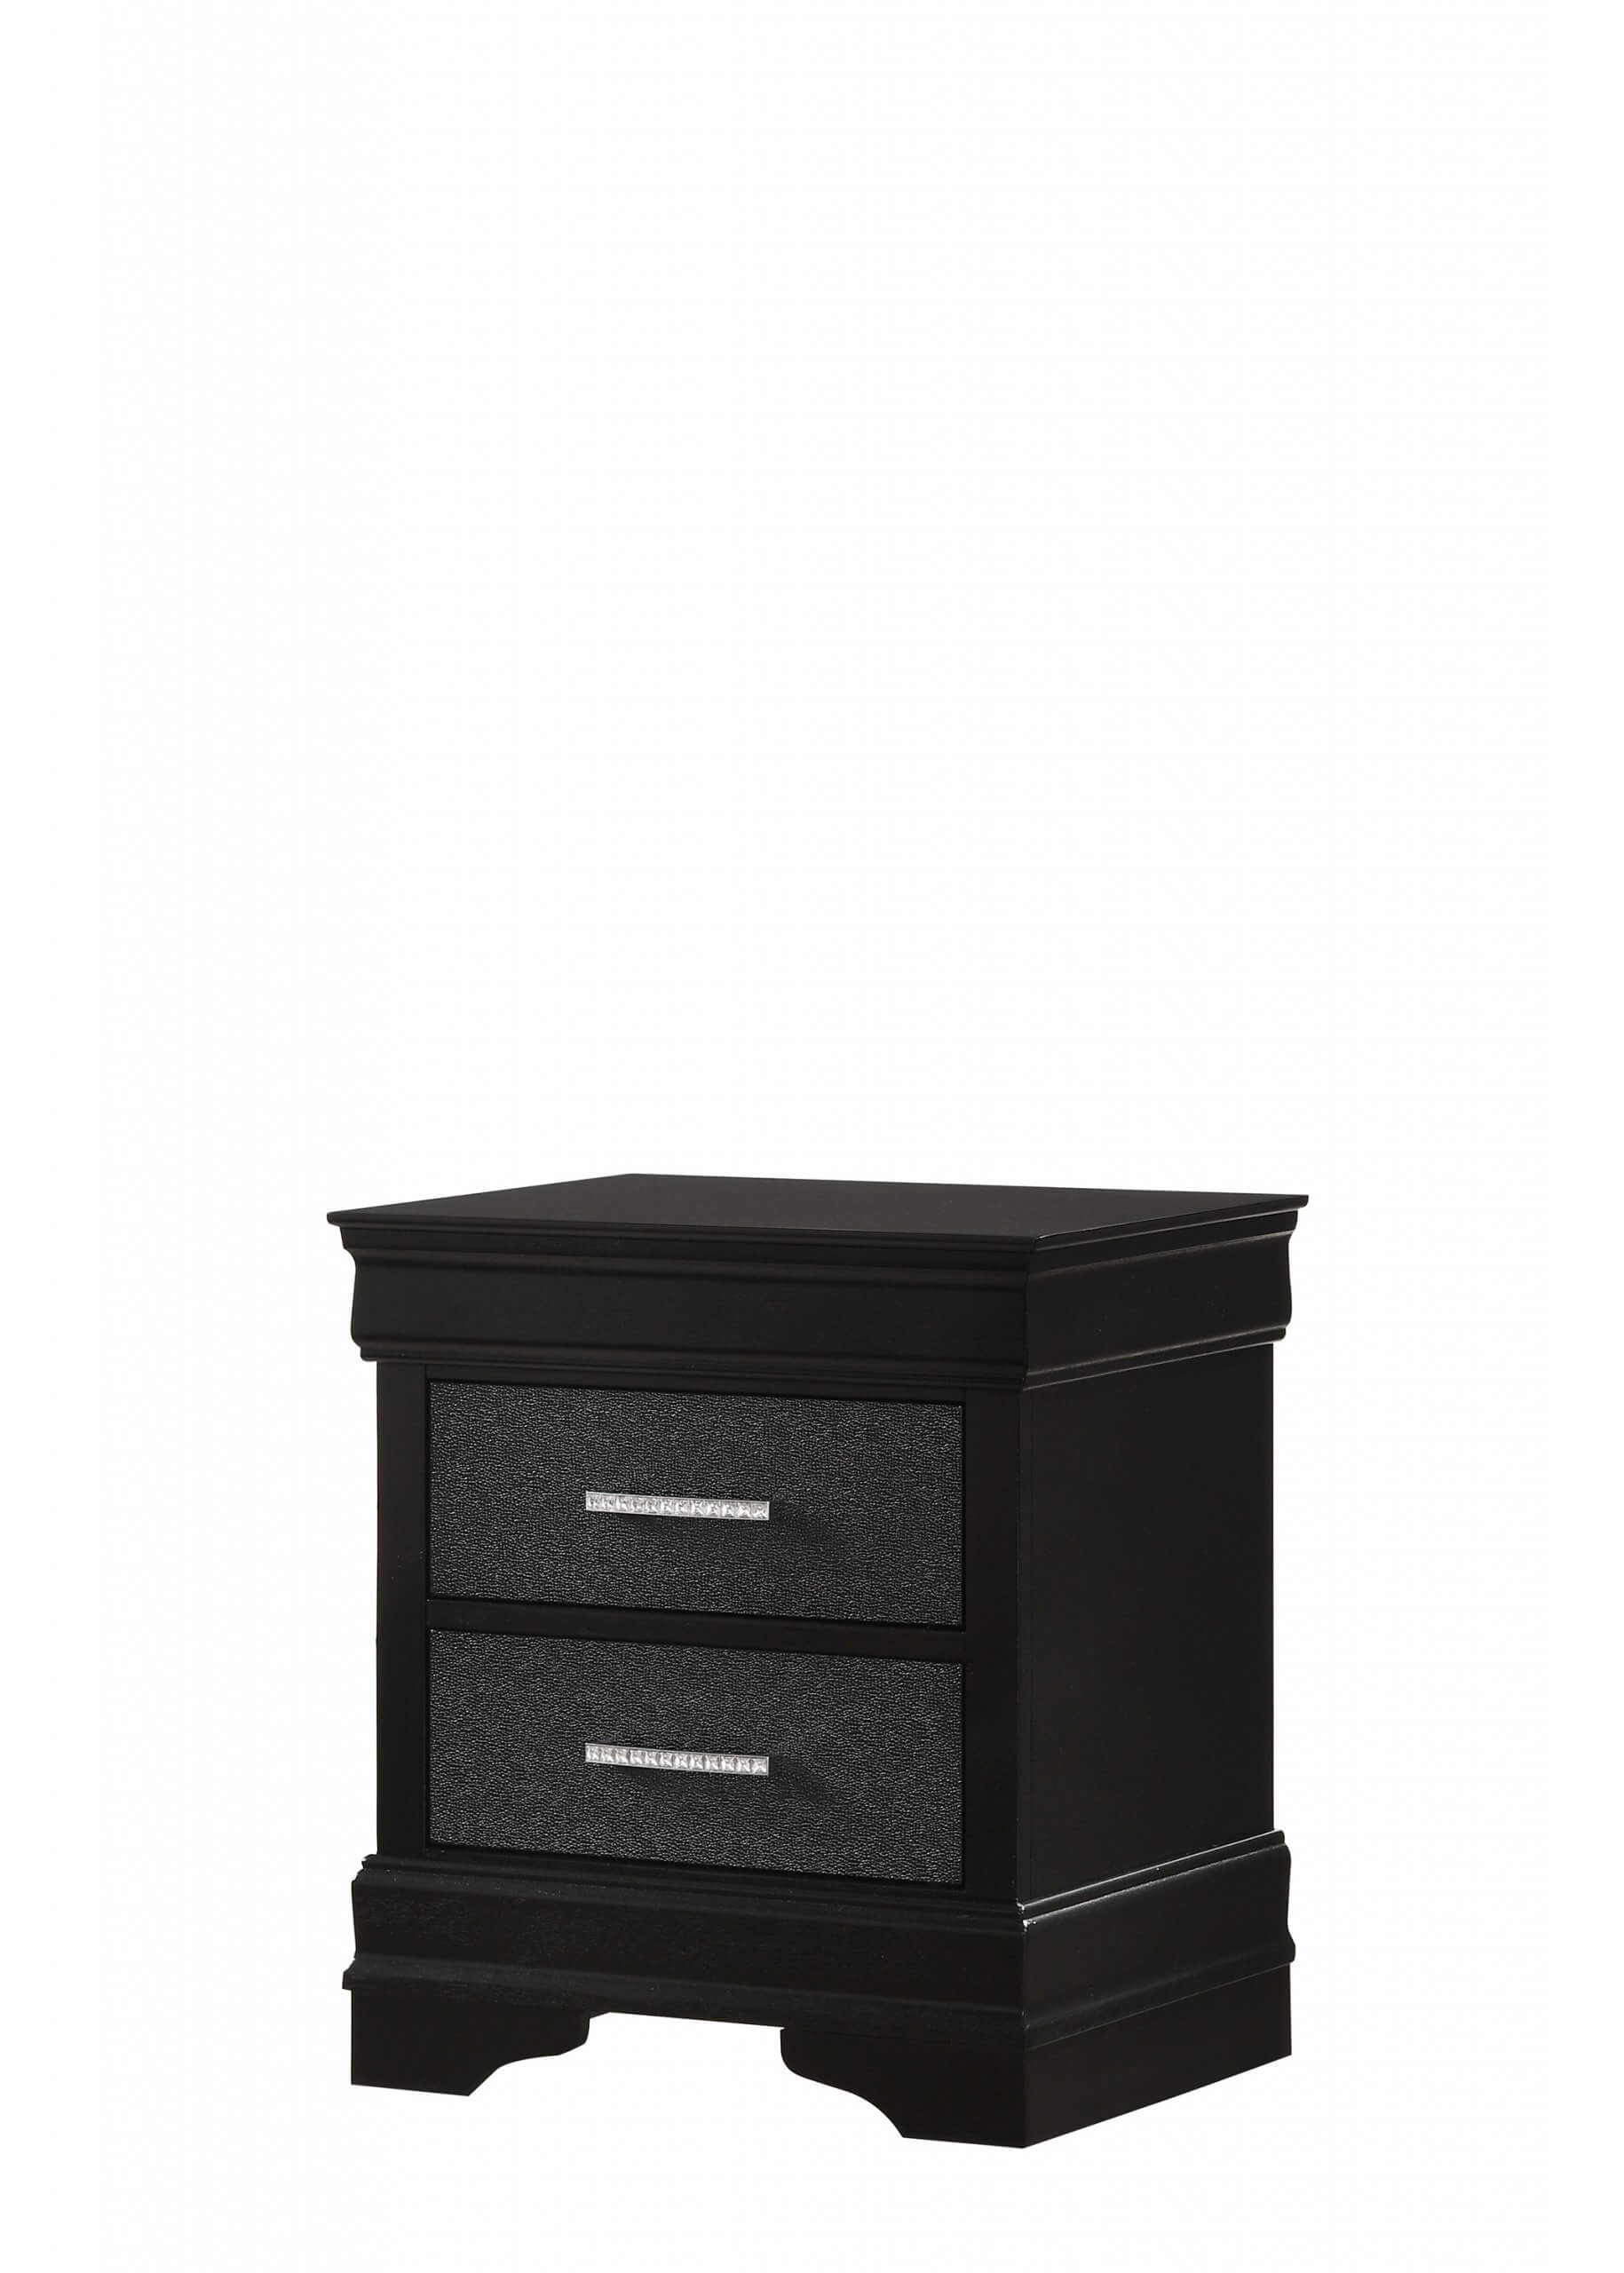 Modern 5pc Full Size Black Finish Upholstered Bed Set Solid Wood Storage Wooden Bedroom Furniture - image 4 of 7